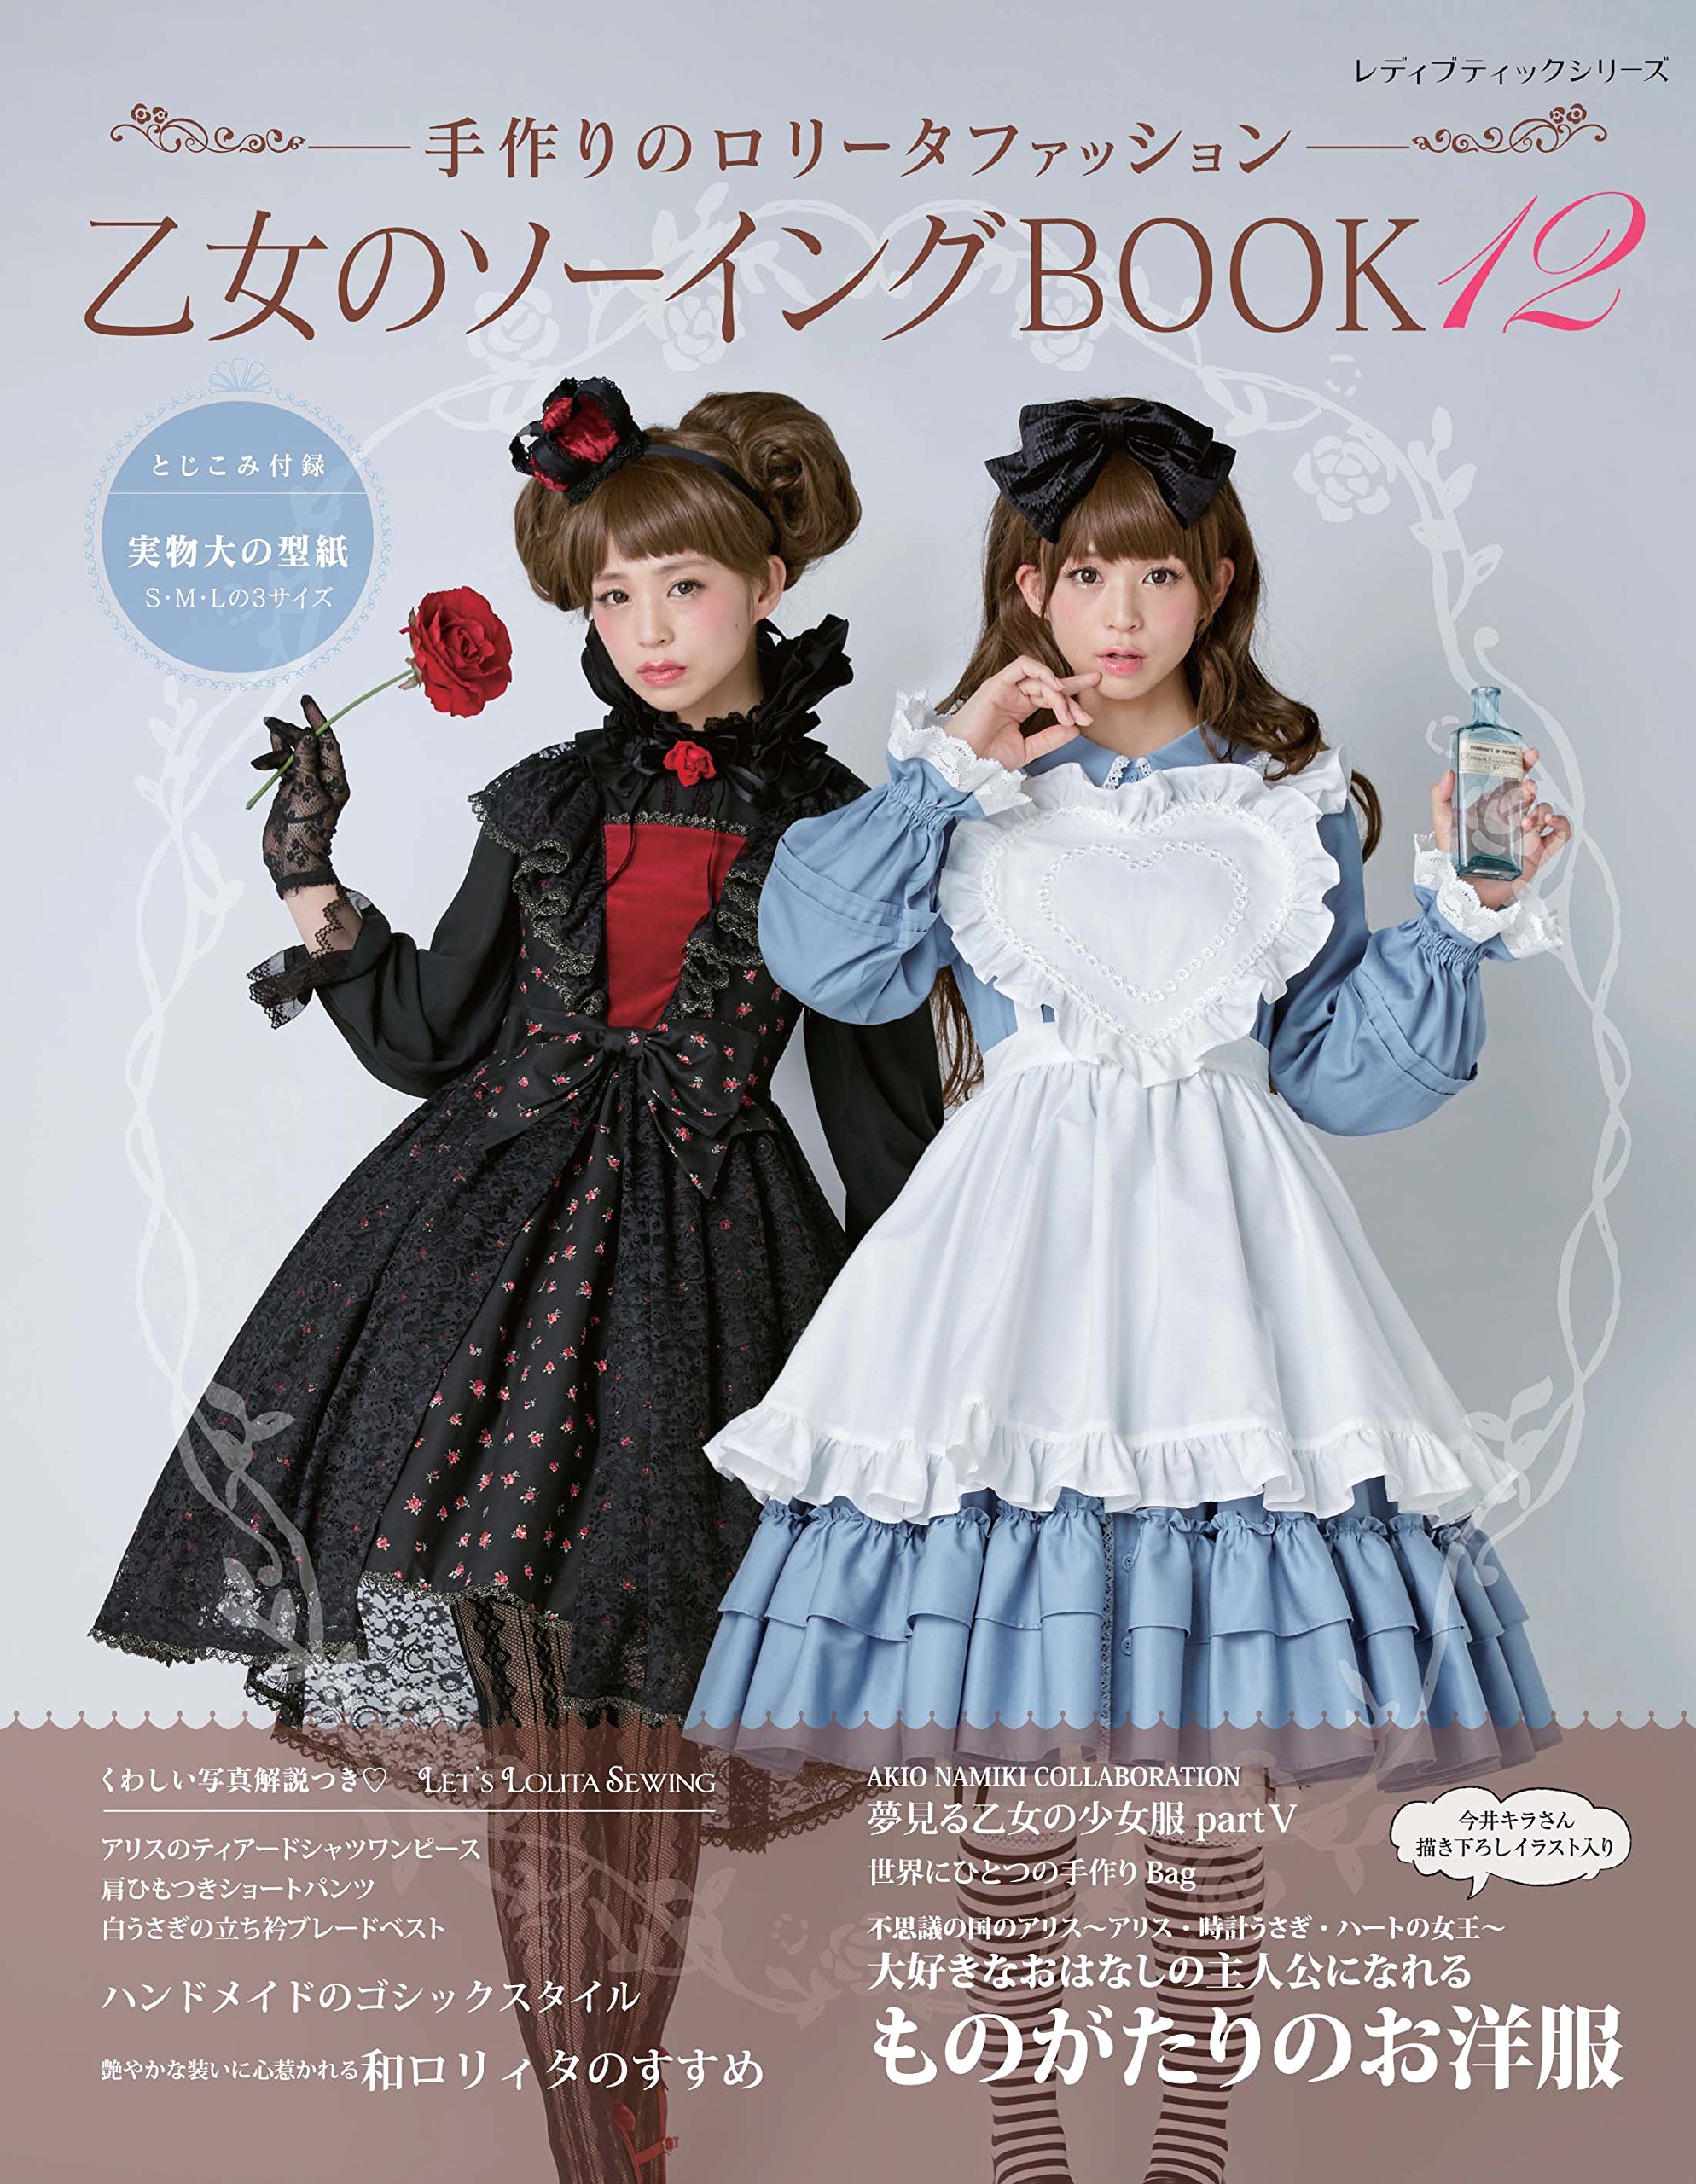 Lolita Fashion sawing BOOK12